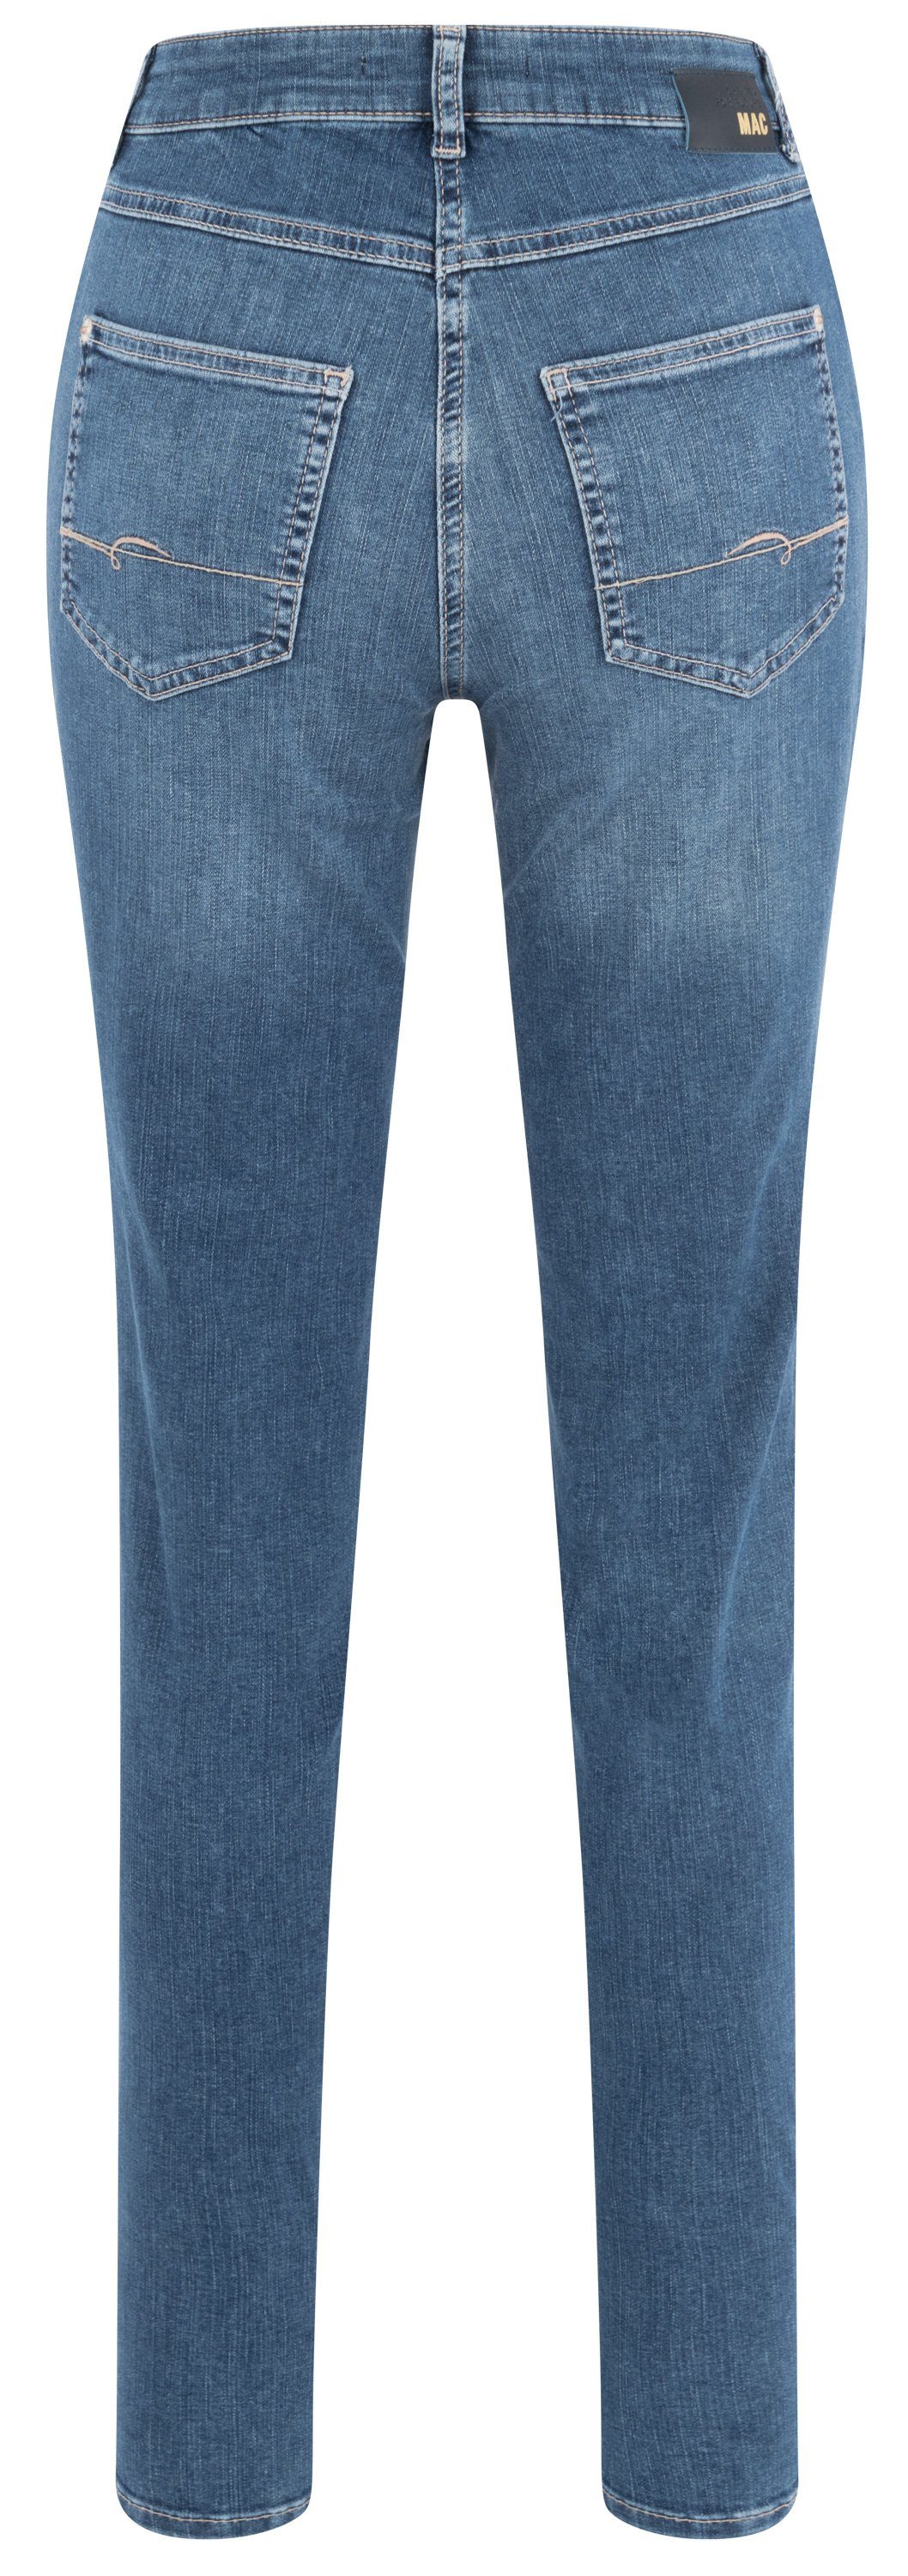 another MELANIE MAC simple Stretch-Jeans MAC D586 wash 5040-97-0380L